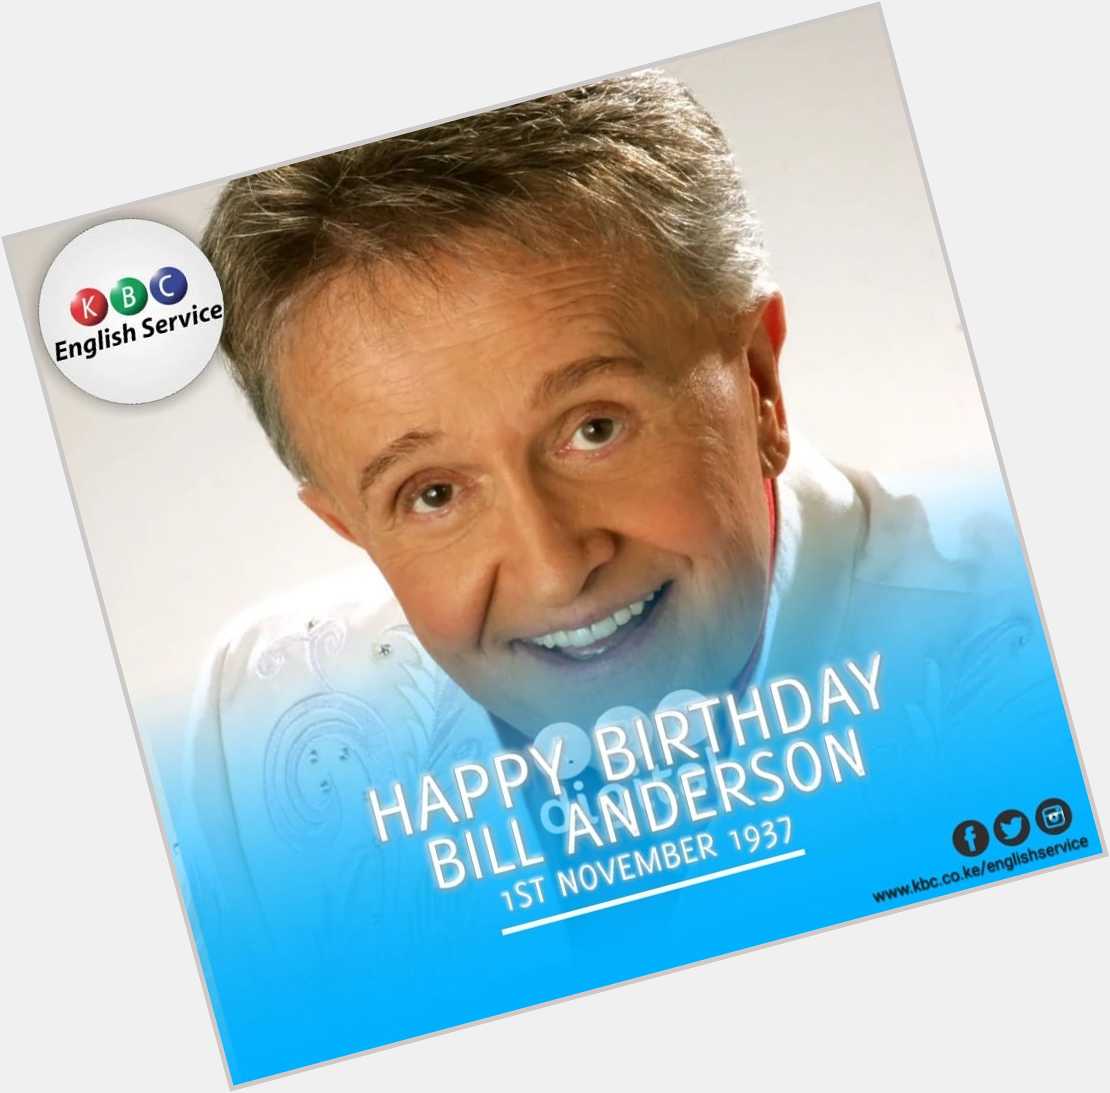 Happy Birthday: BILL ANDERSON
Born: 1st November 1937

^PMN   